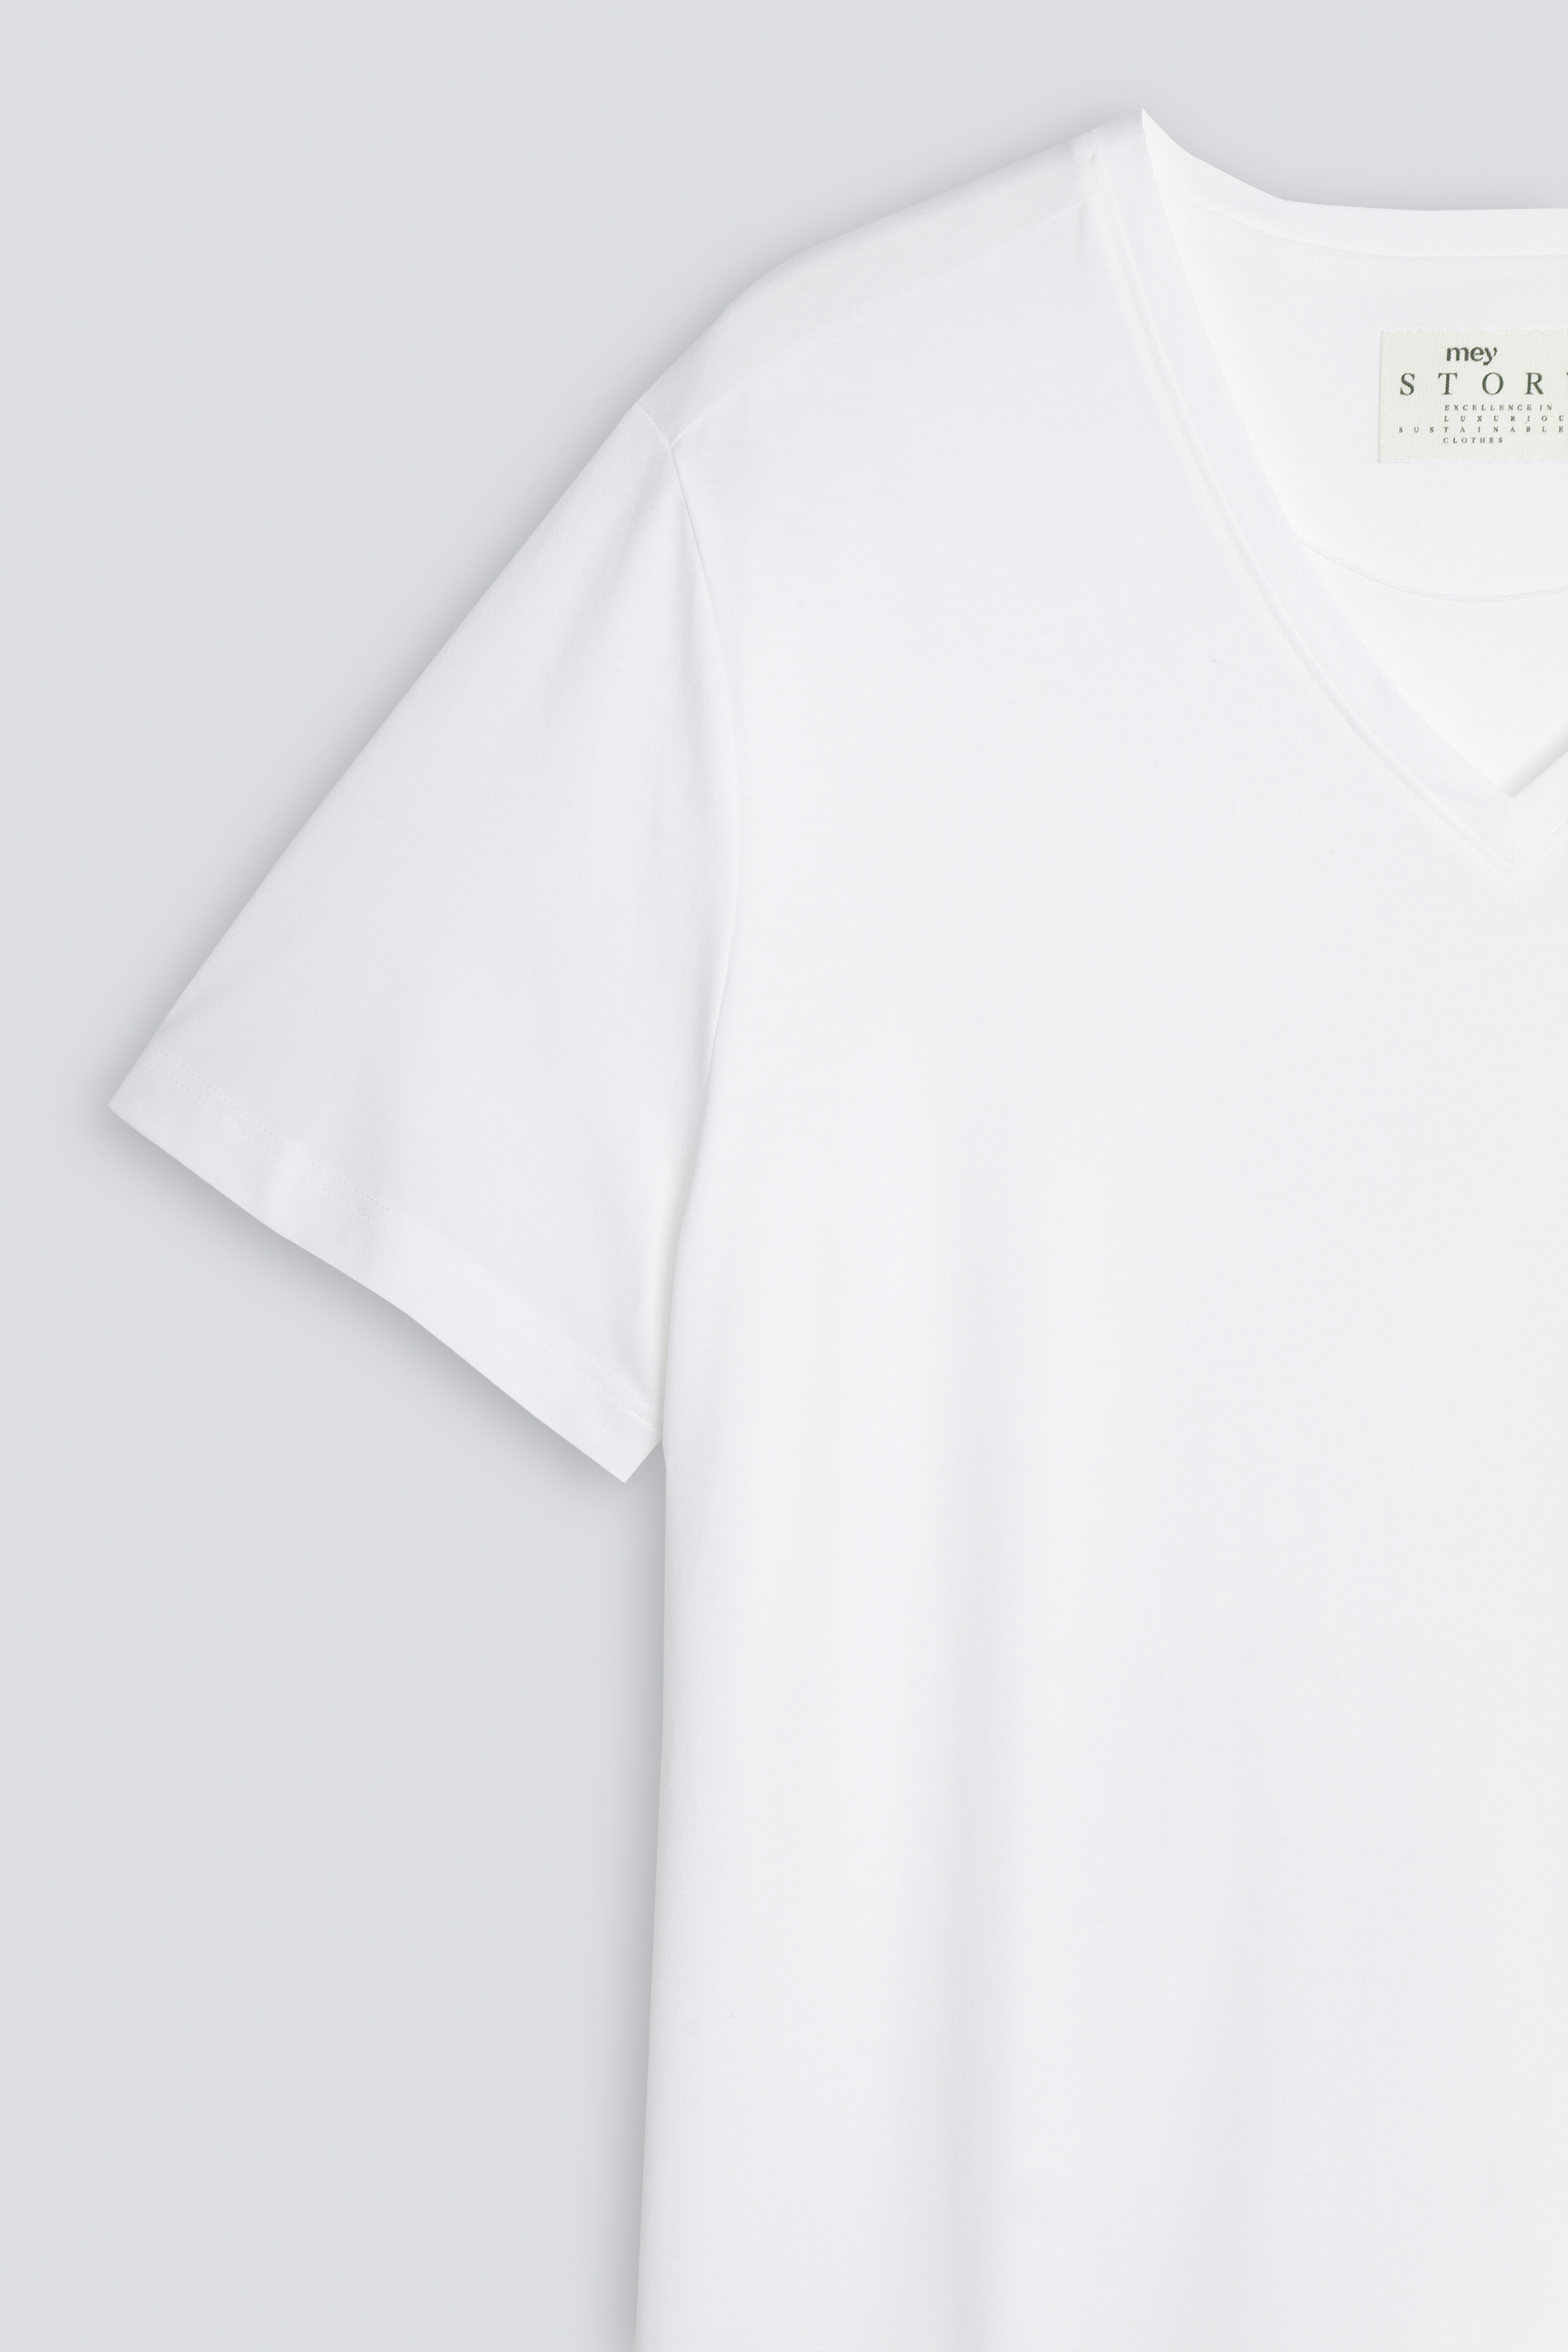 V-Neck Shirt Serie Maglia Singola Detailansicht 01 | mey®